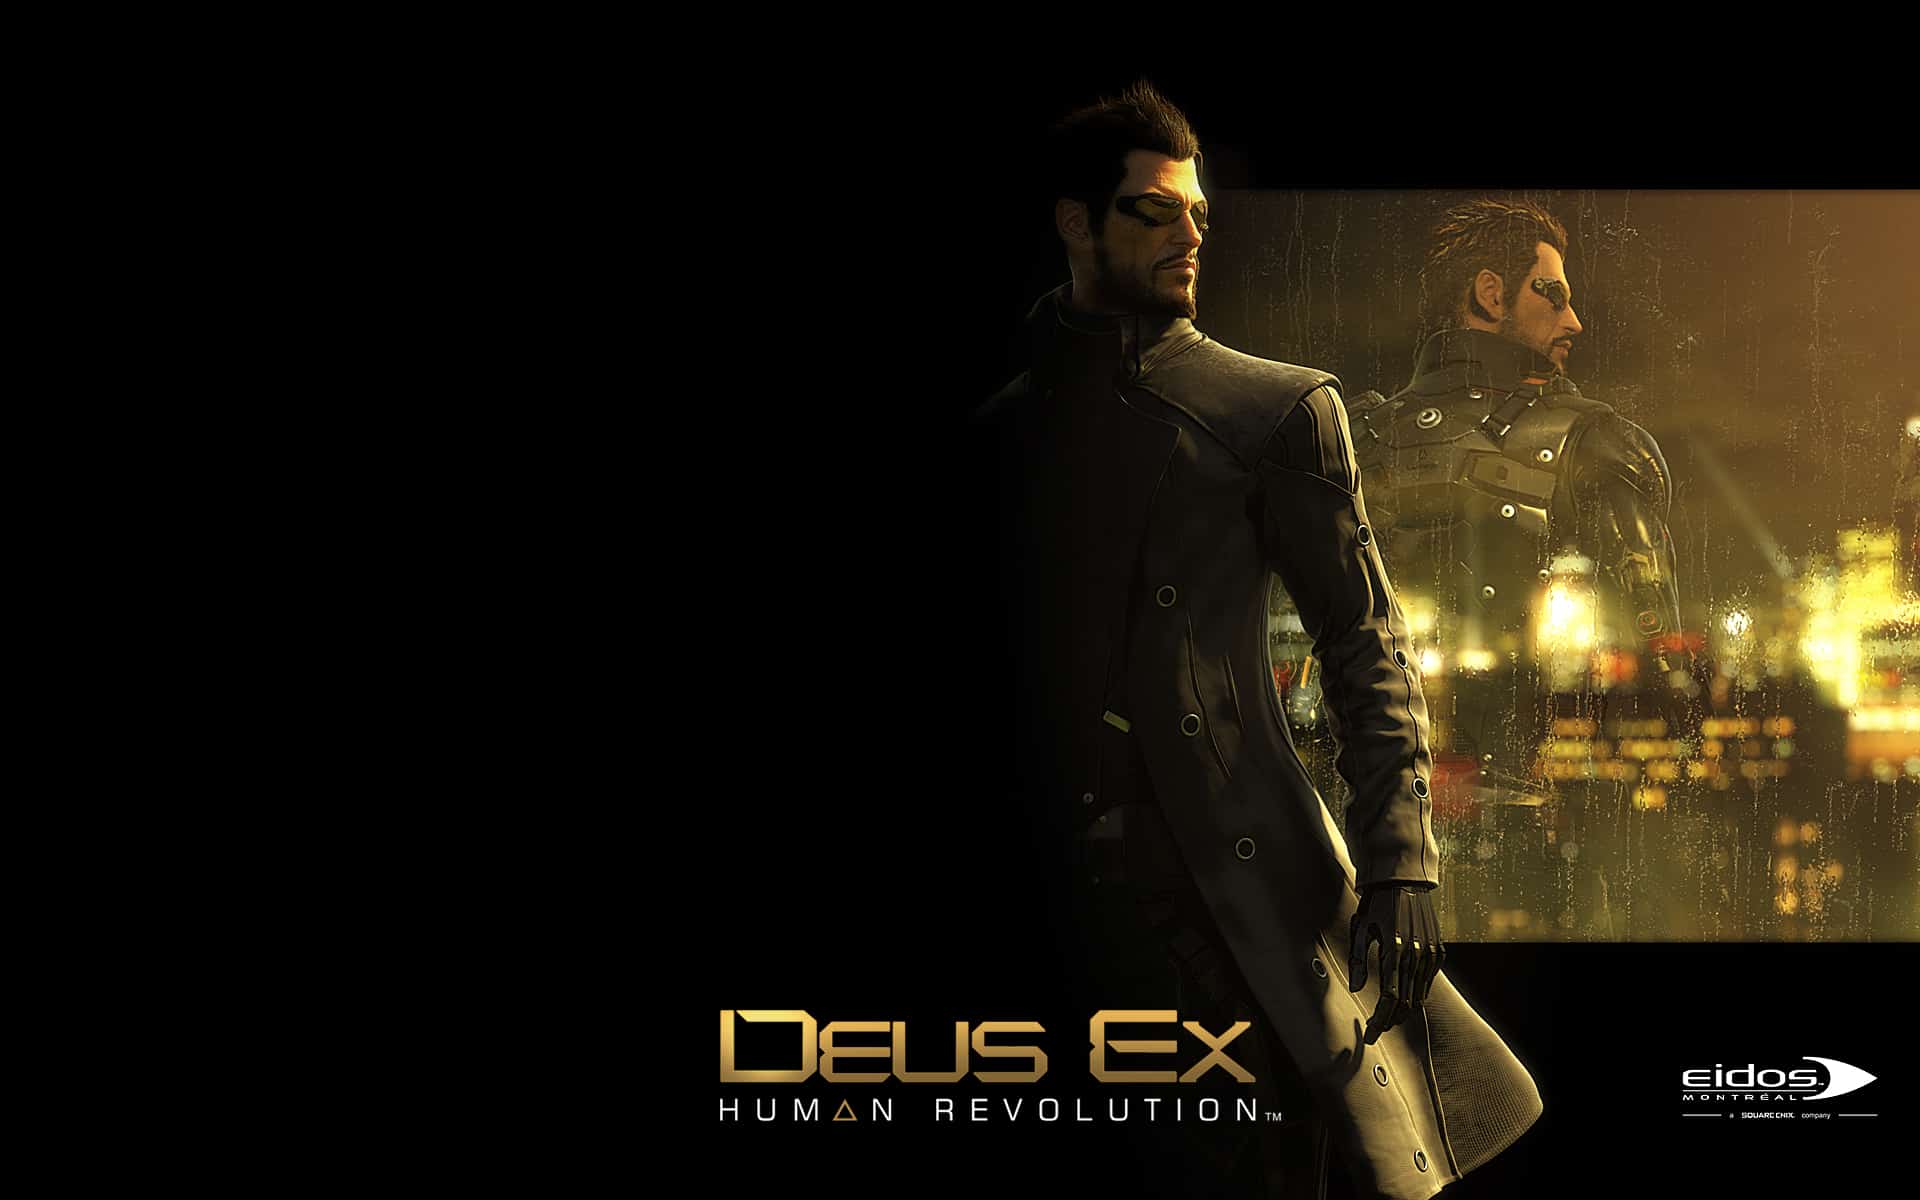 Deus Ex Human Revolution Wallpaper Hd Images, Photos, Reviews